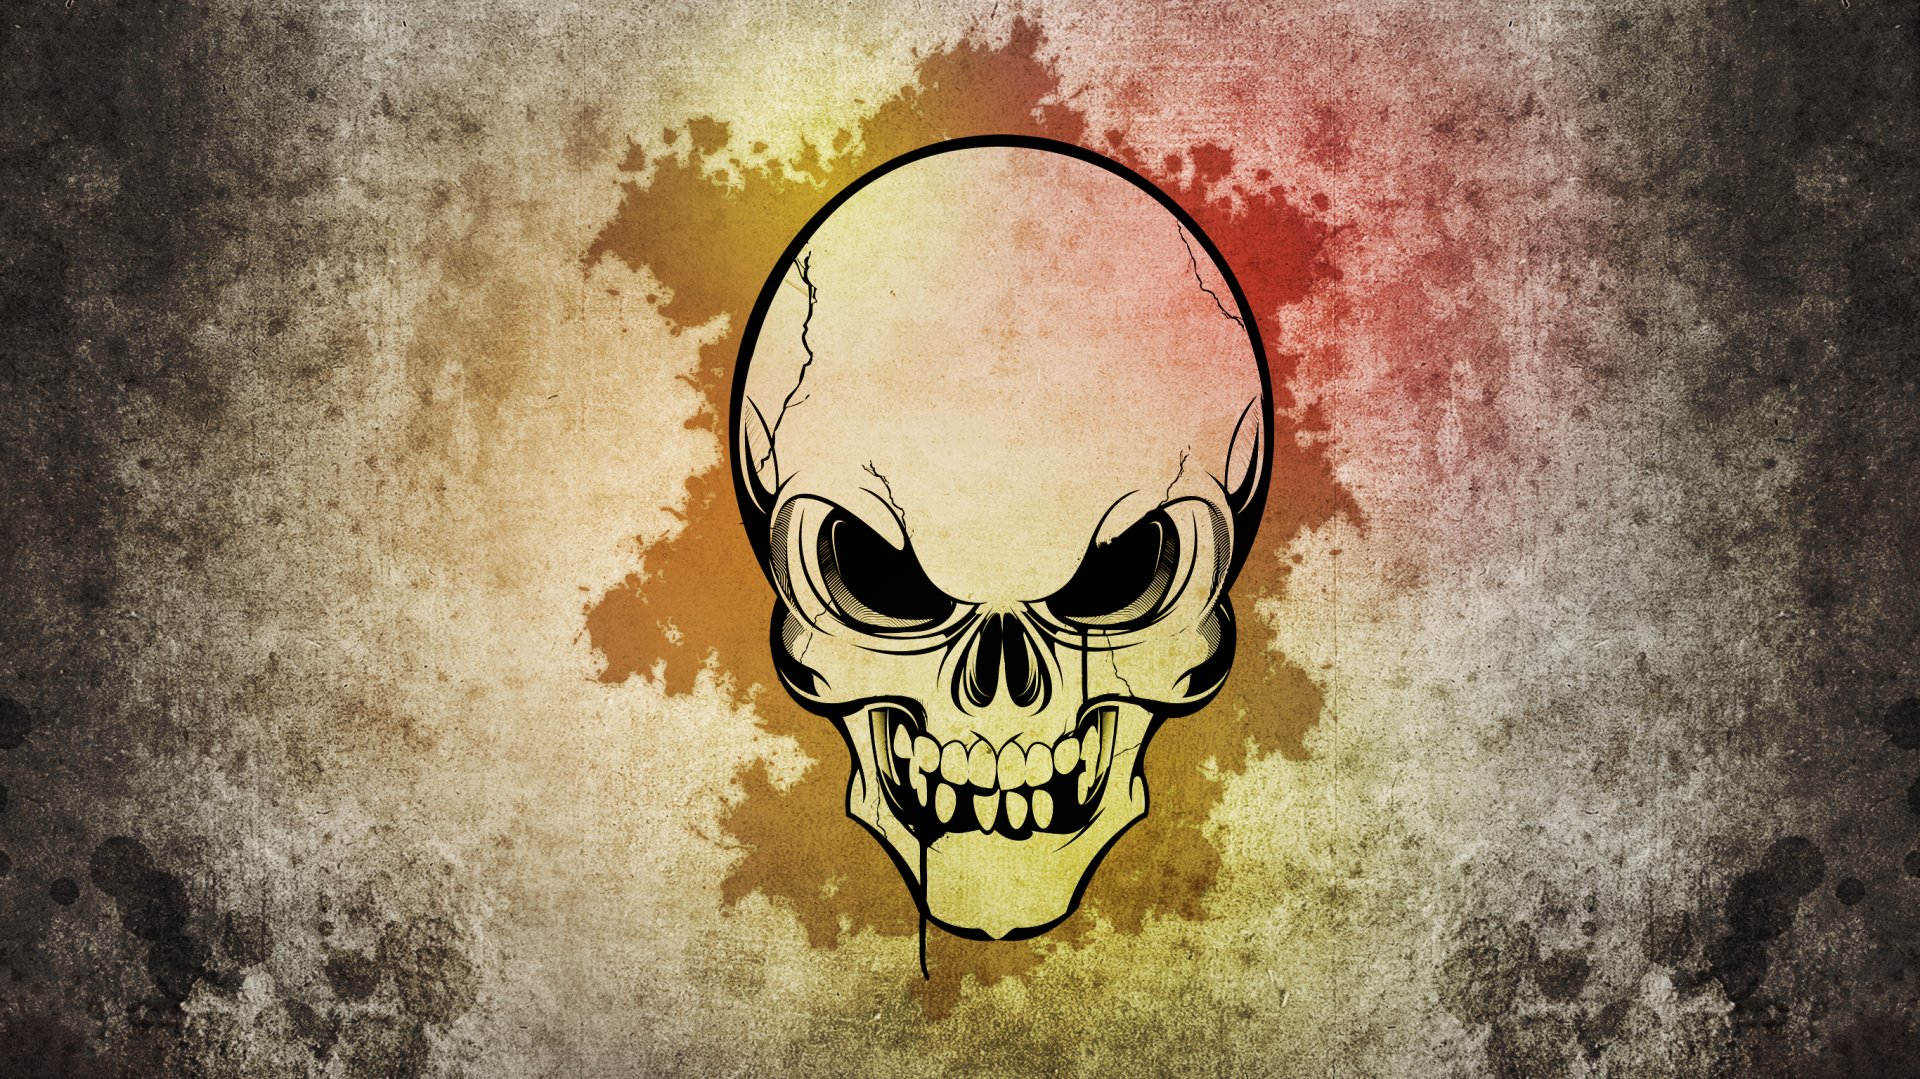 Skull HD Wallpaper | Background Image | 2732x1536 | ID ...